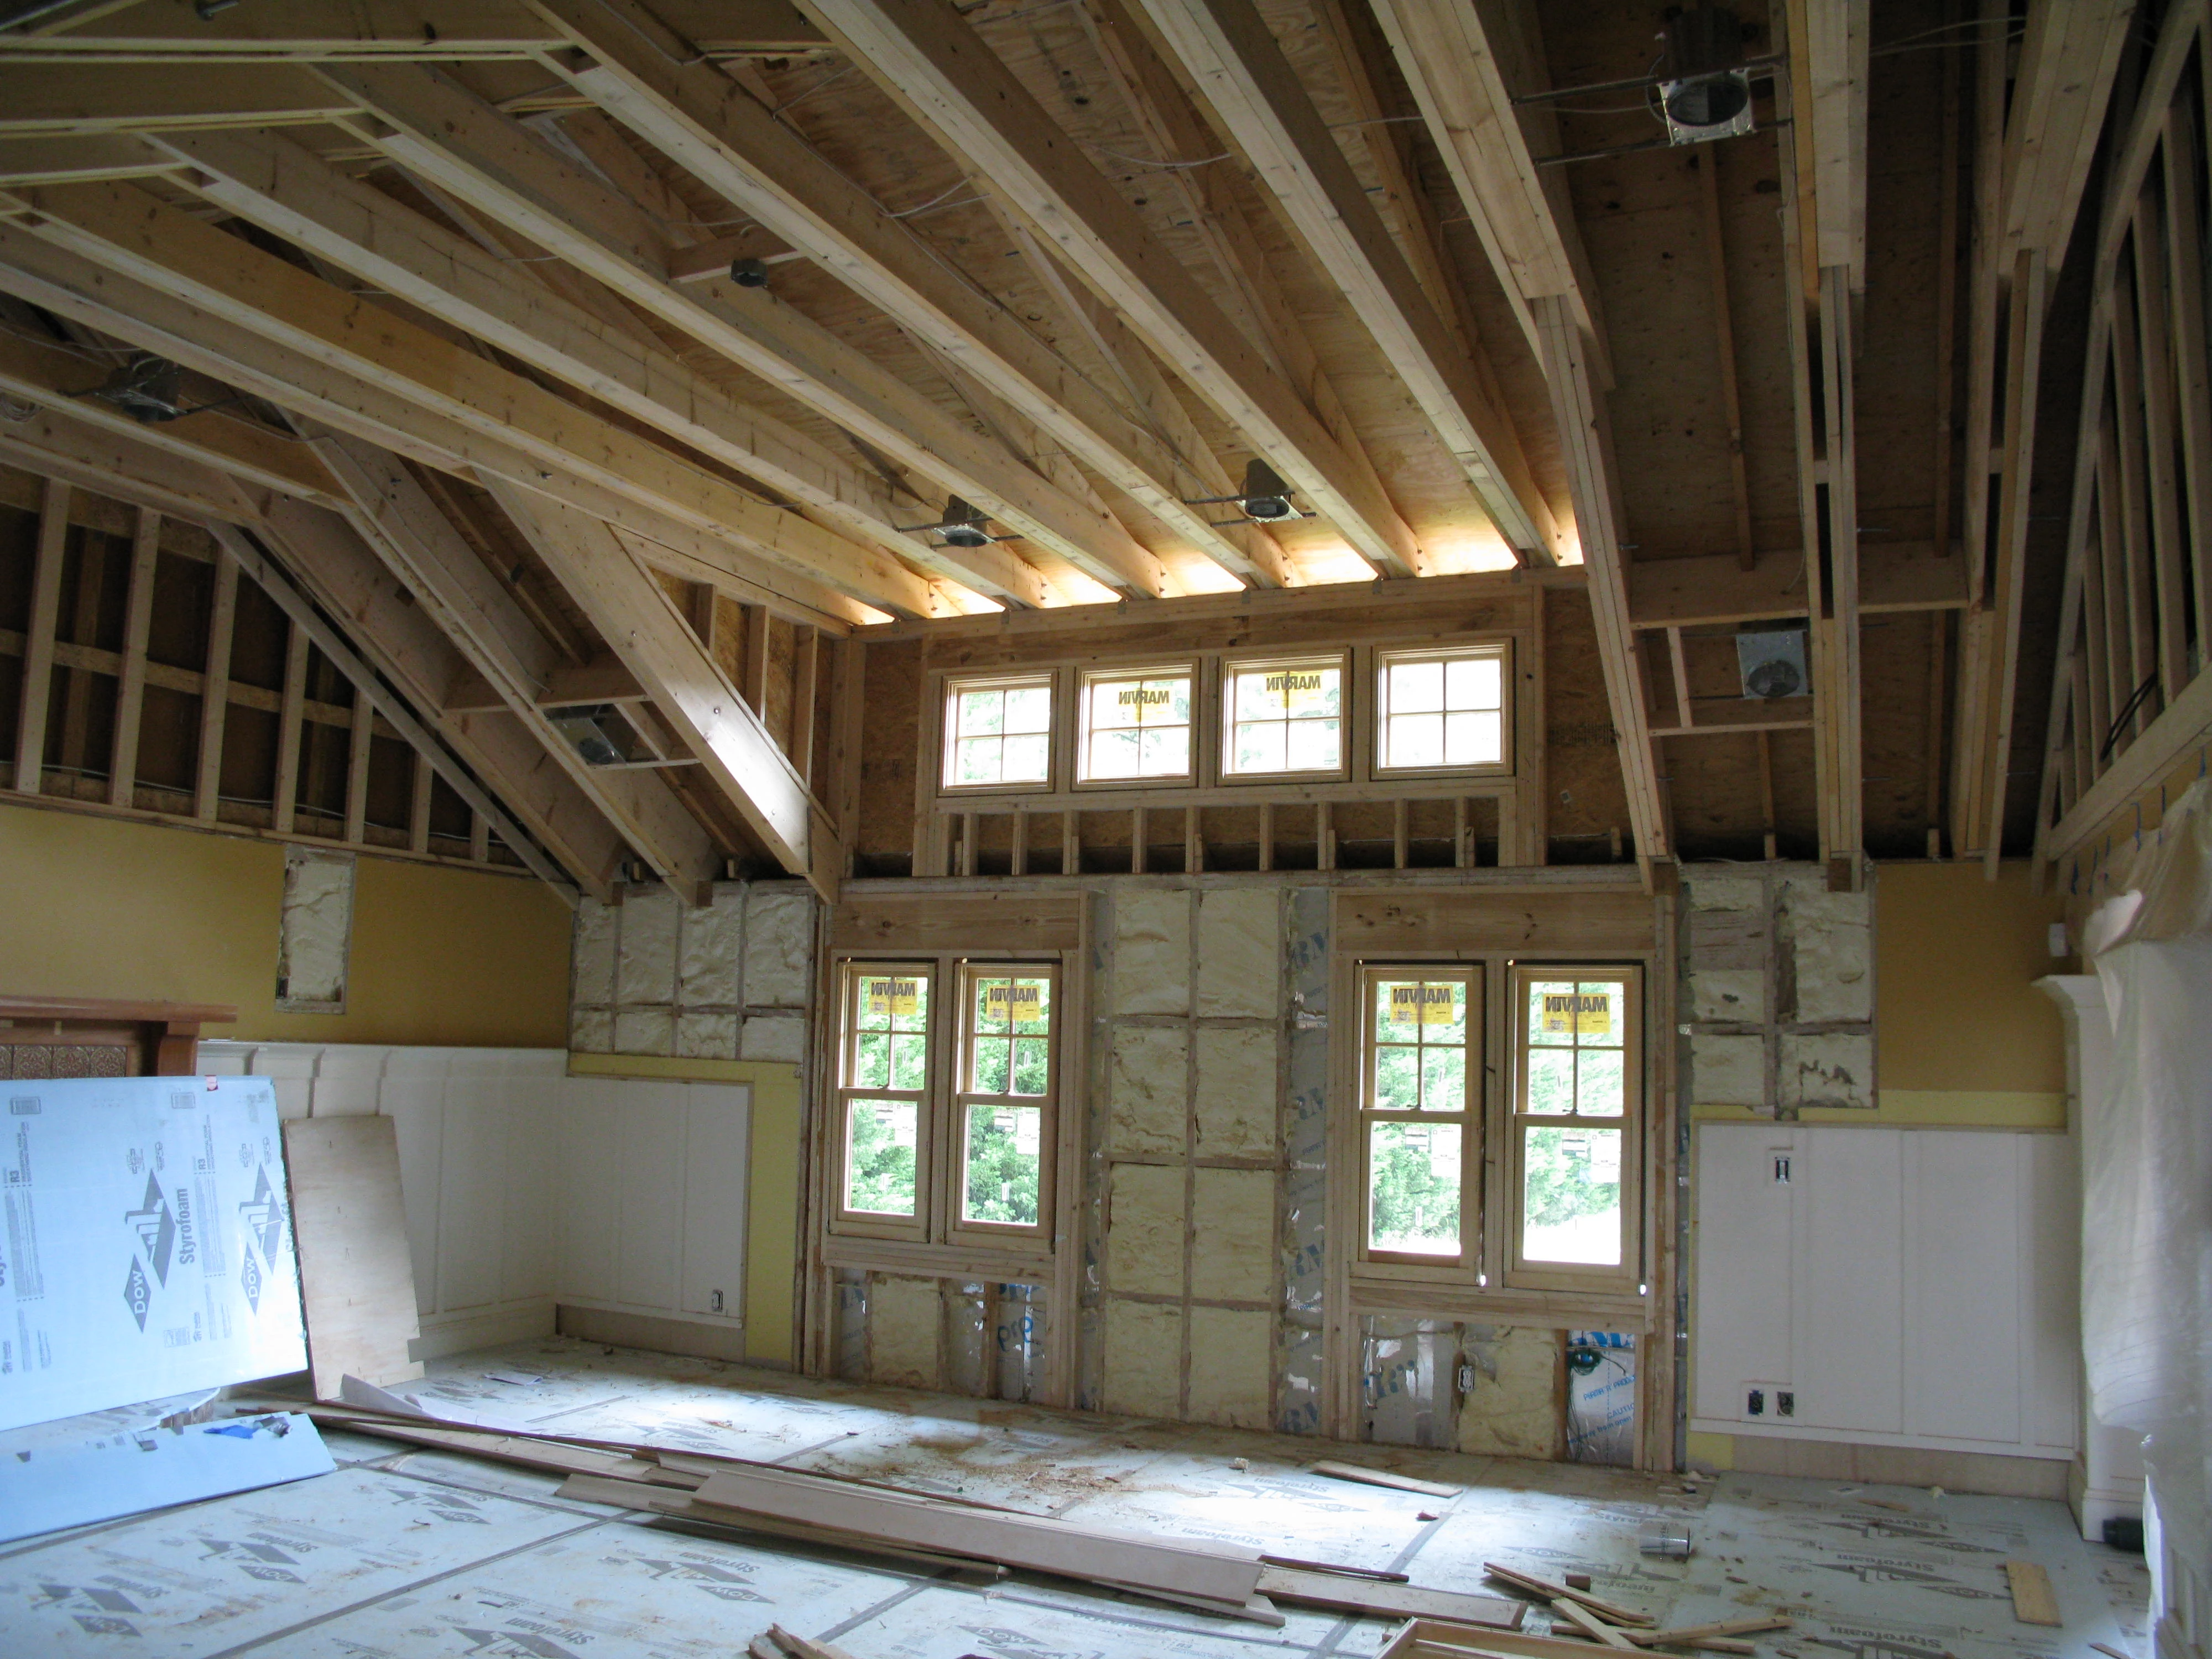 Raised ceiling, spray foam insulation (Source: Flickr)